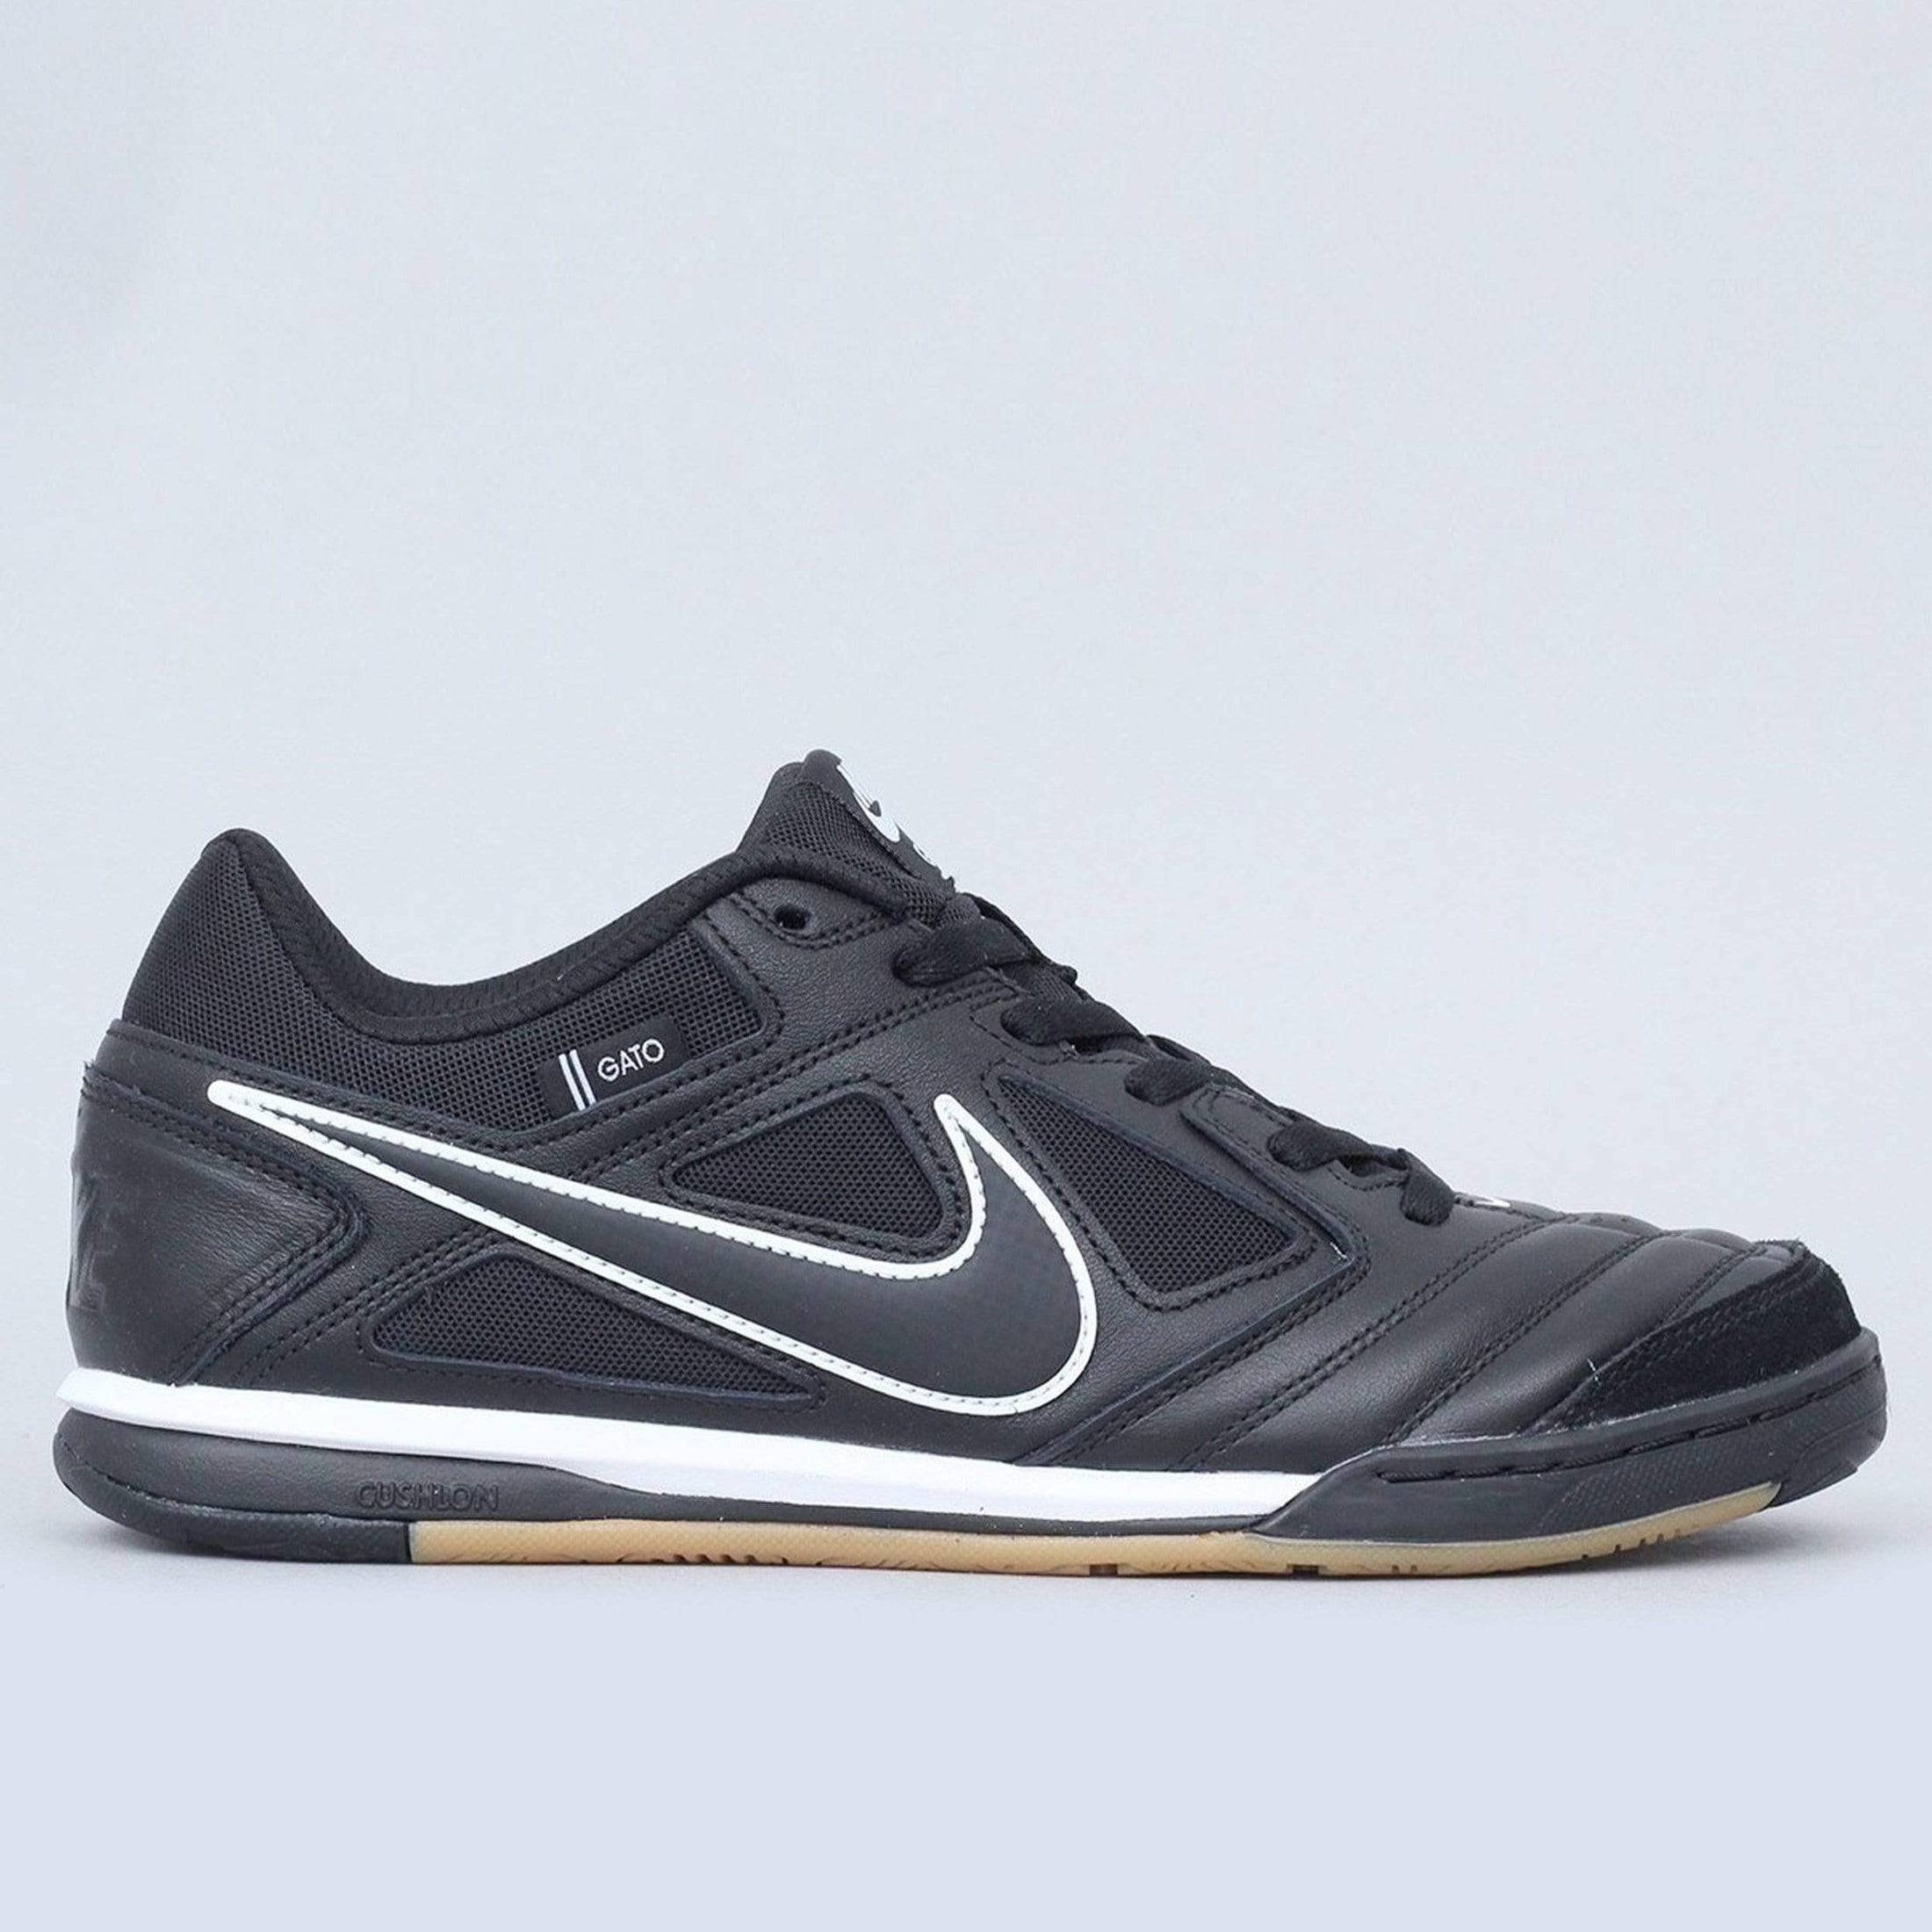 Nike SB Gato Shoes Black / Black - White